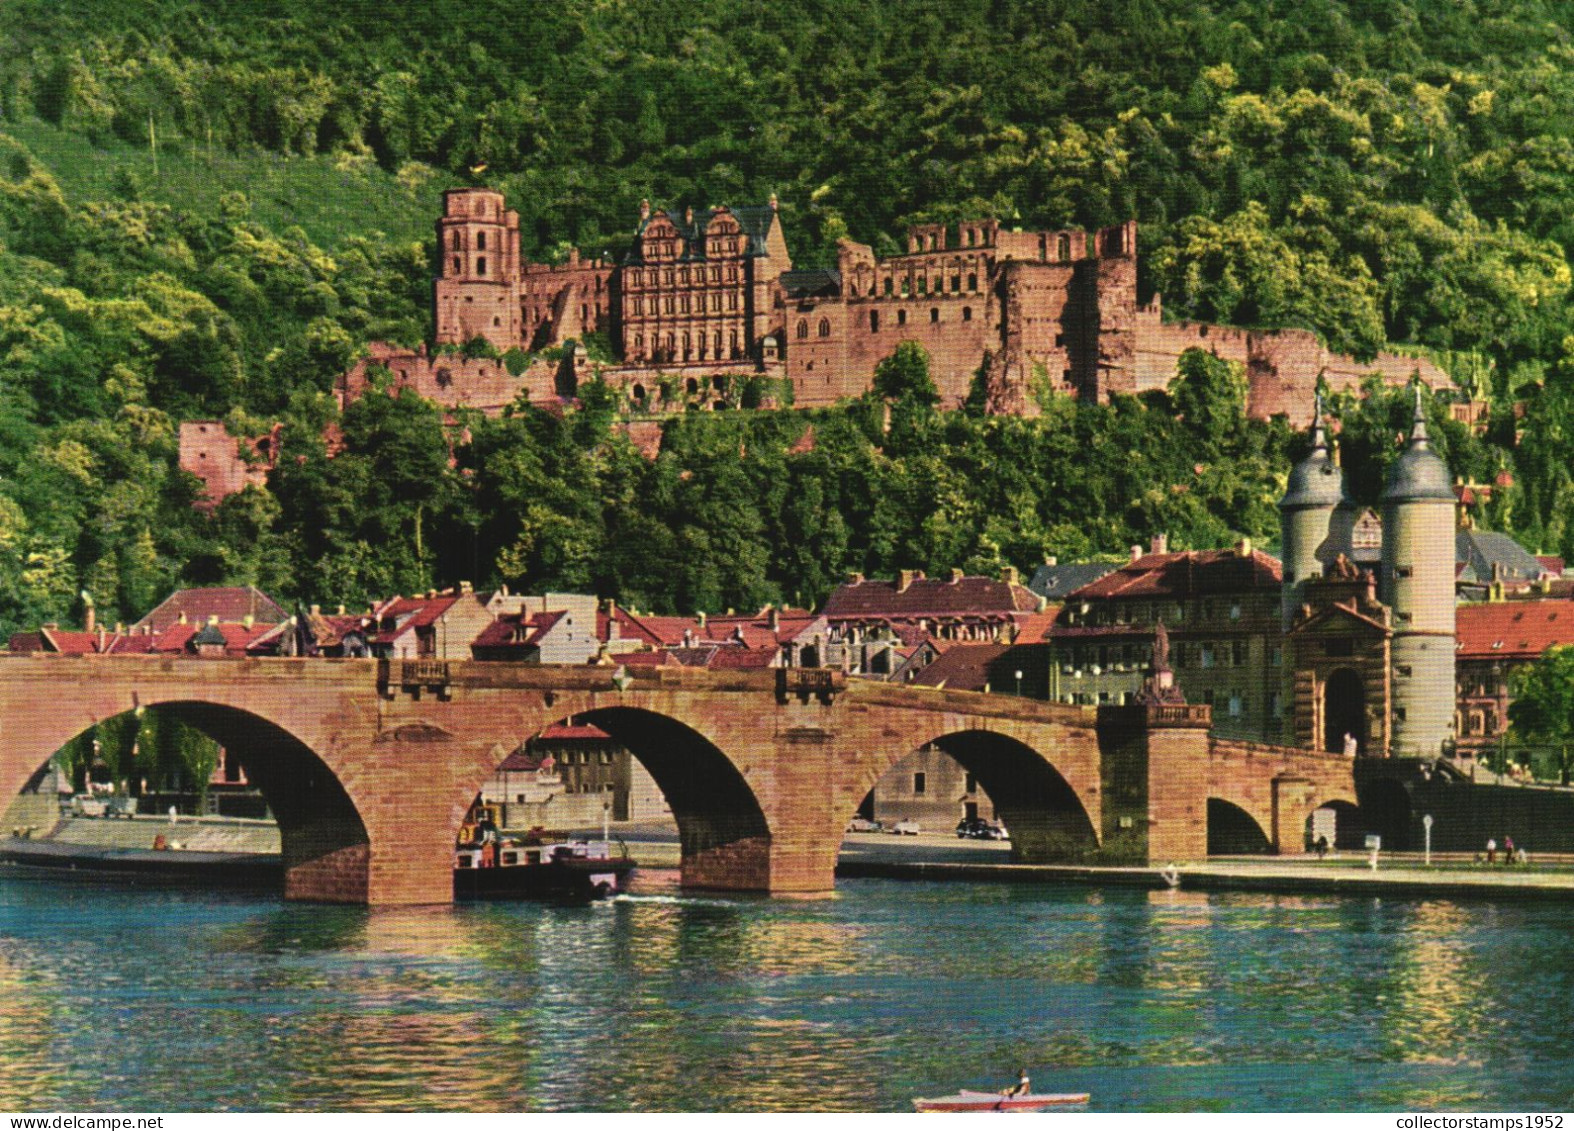 HEIDELBERG, BADEN WURTTEMBERG, CASTLE, ARCHITECTURE, BRIDGE, TOWER, SHIP, GERMANY, POSTCARD - Heidelberg